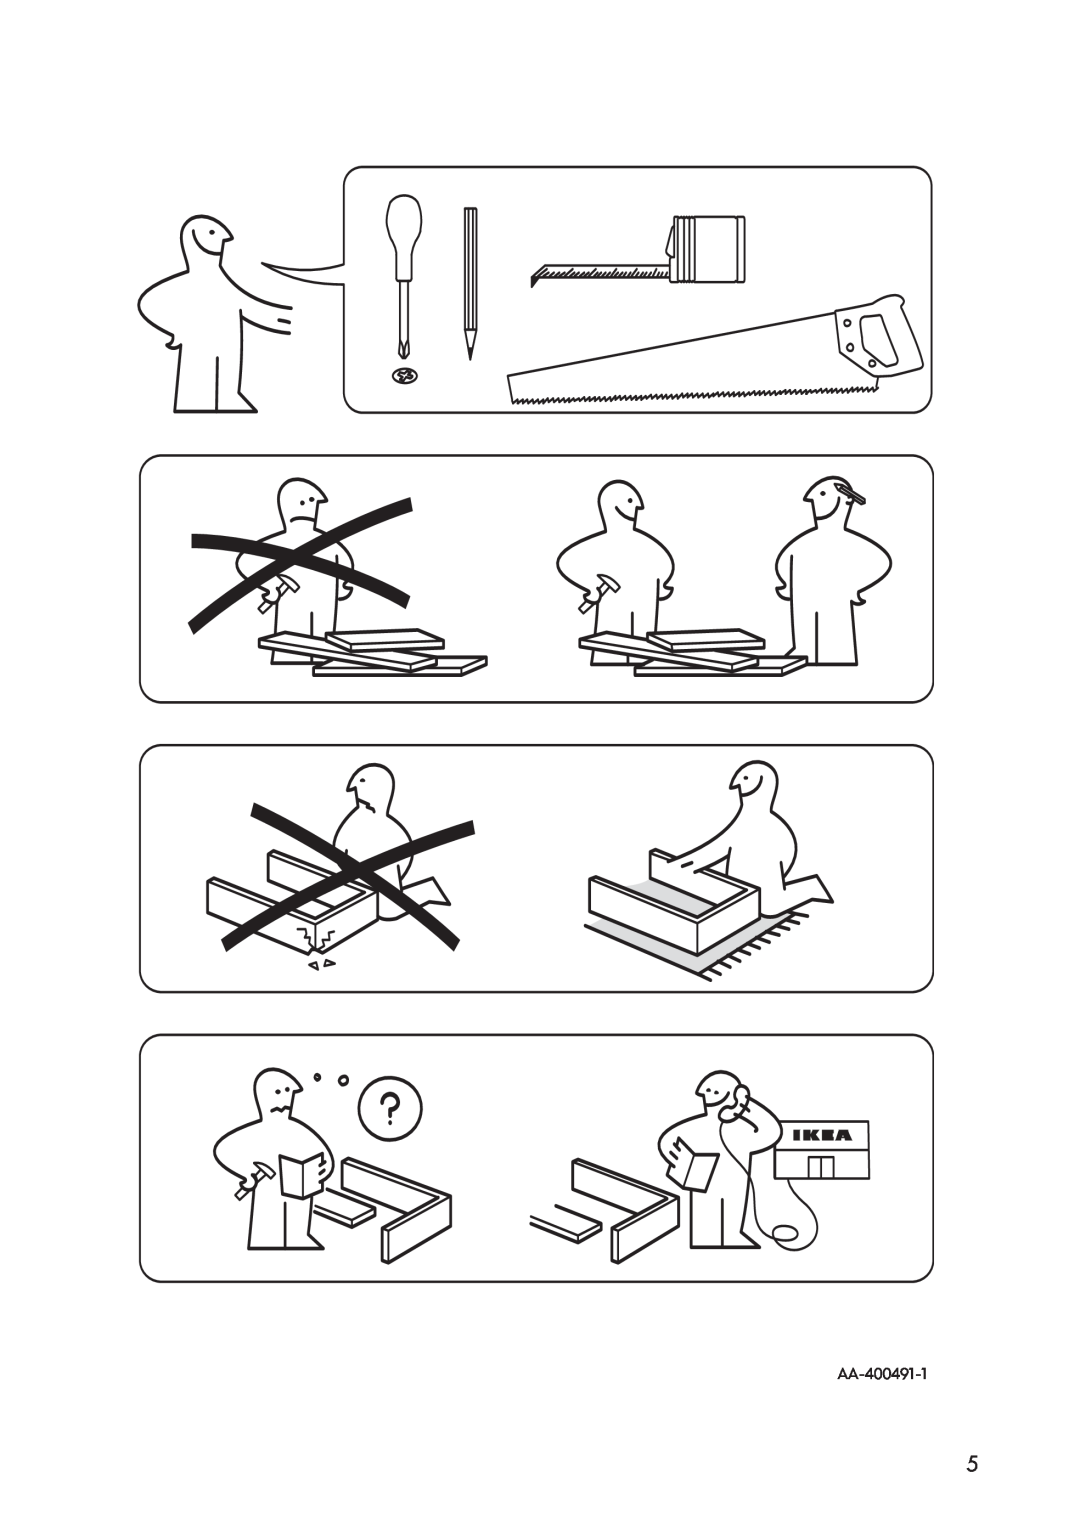 IKEA HIN1T manual AA-400491-1 